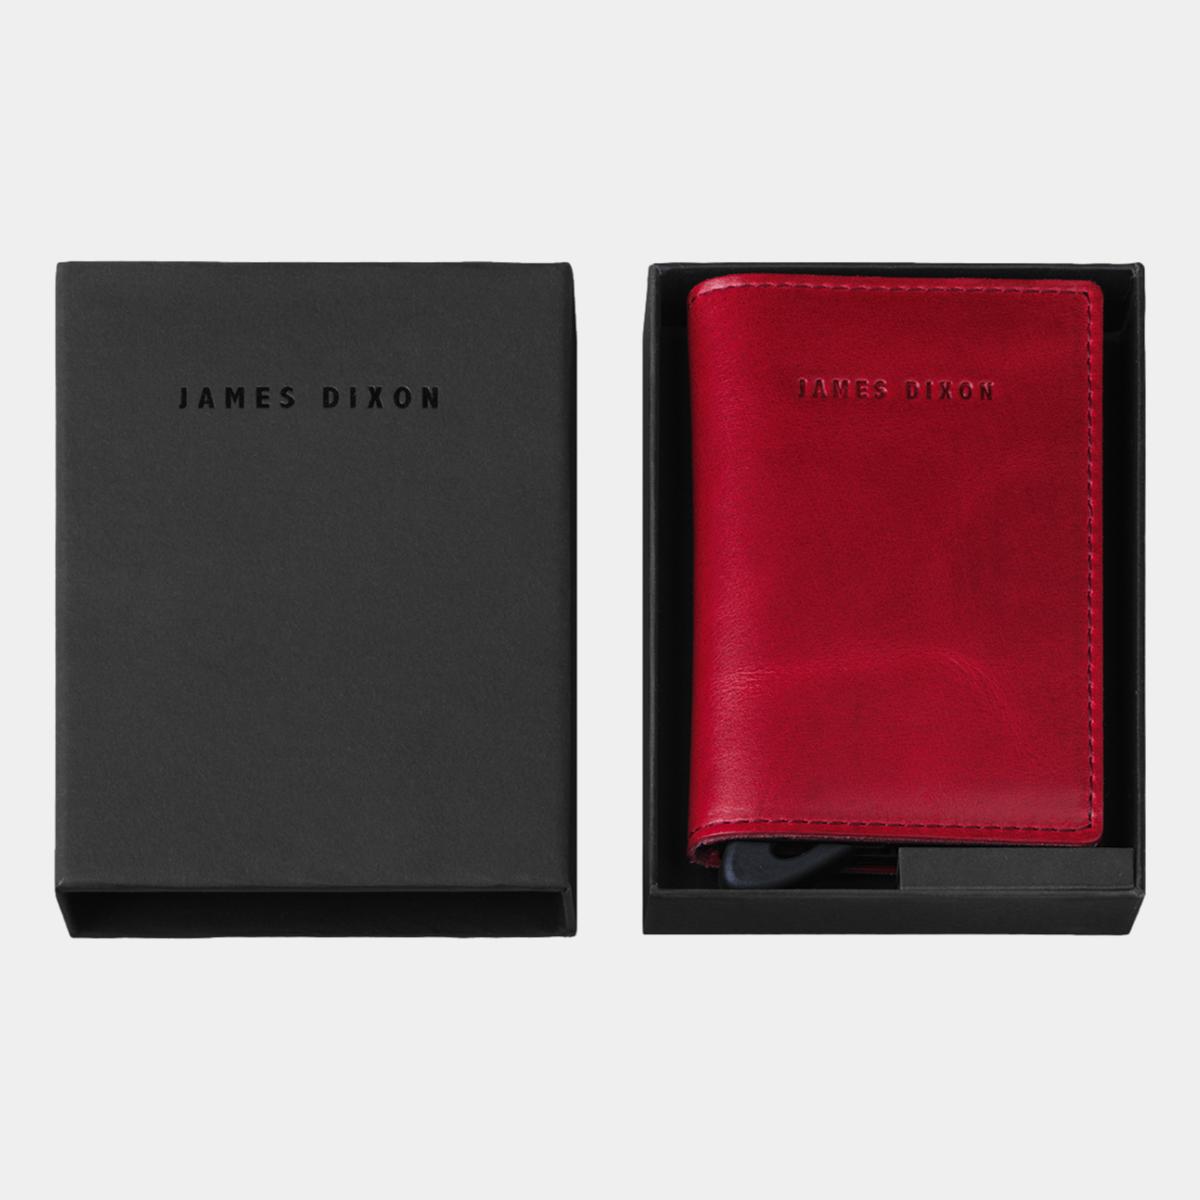 jd0118 james dixon puro classic red coin pocket wallet box